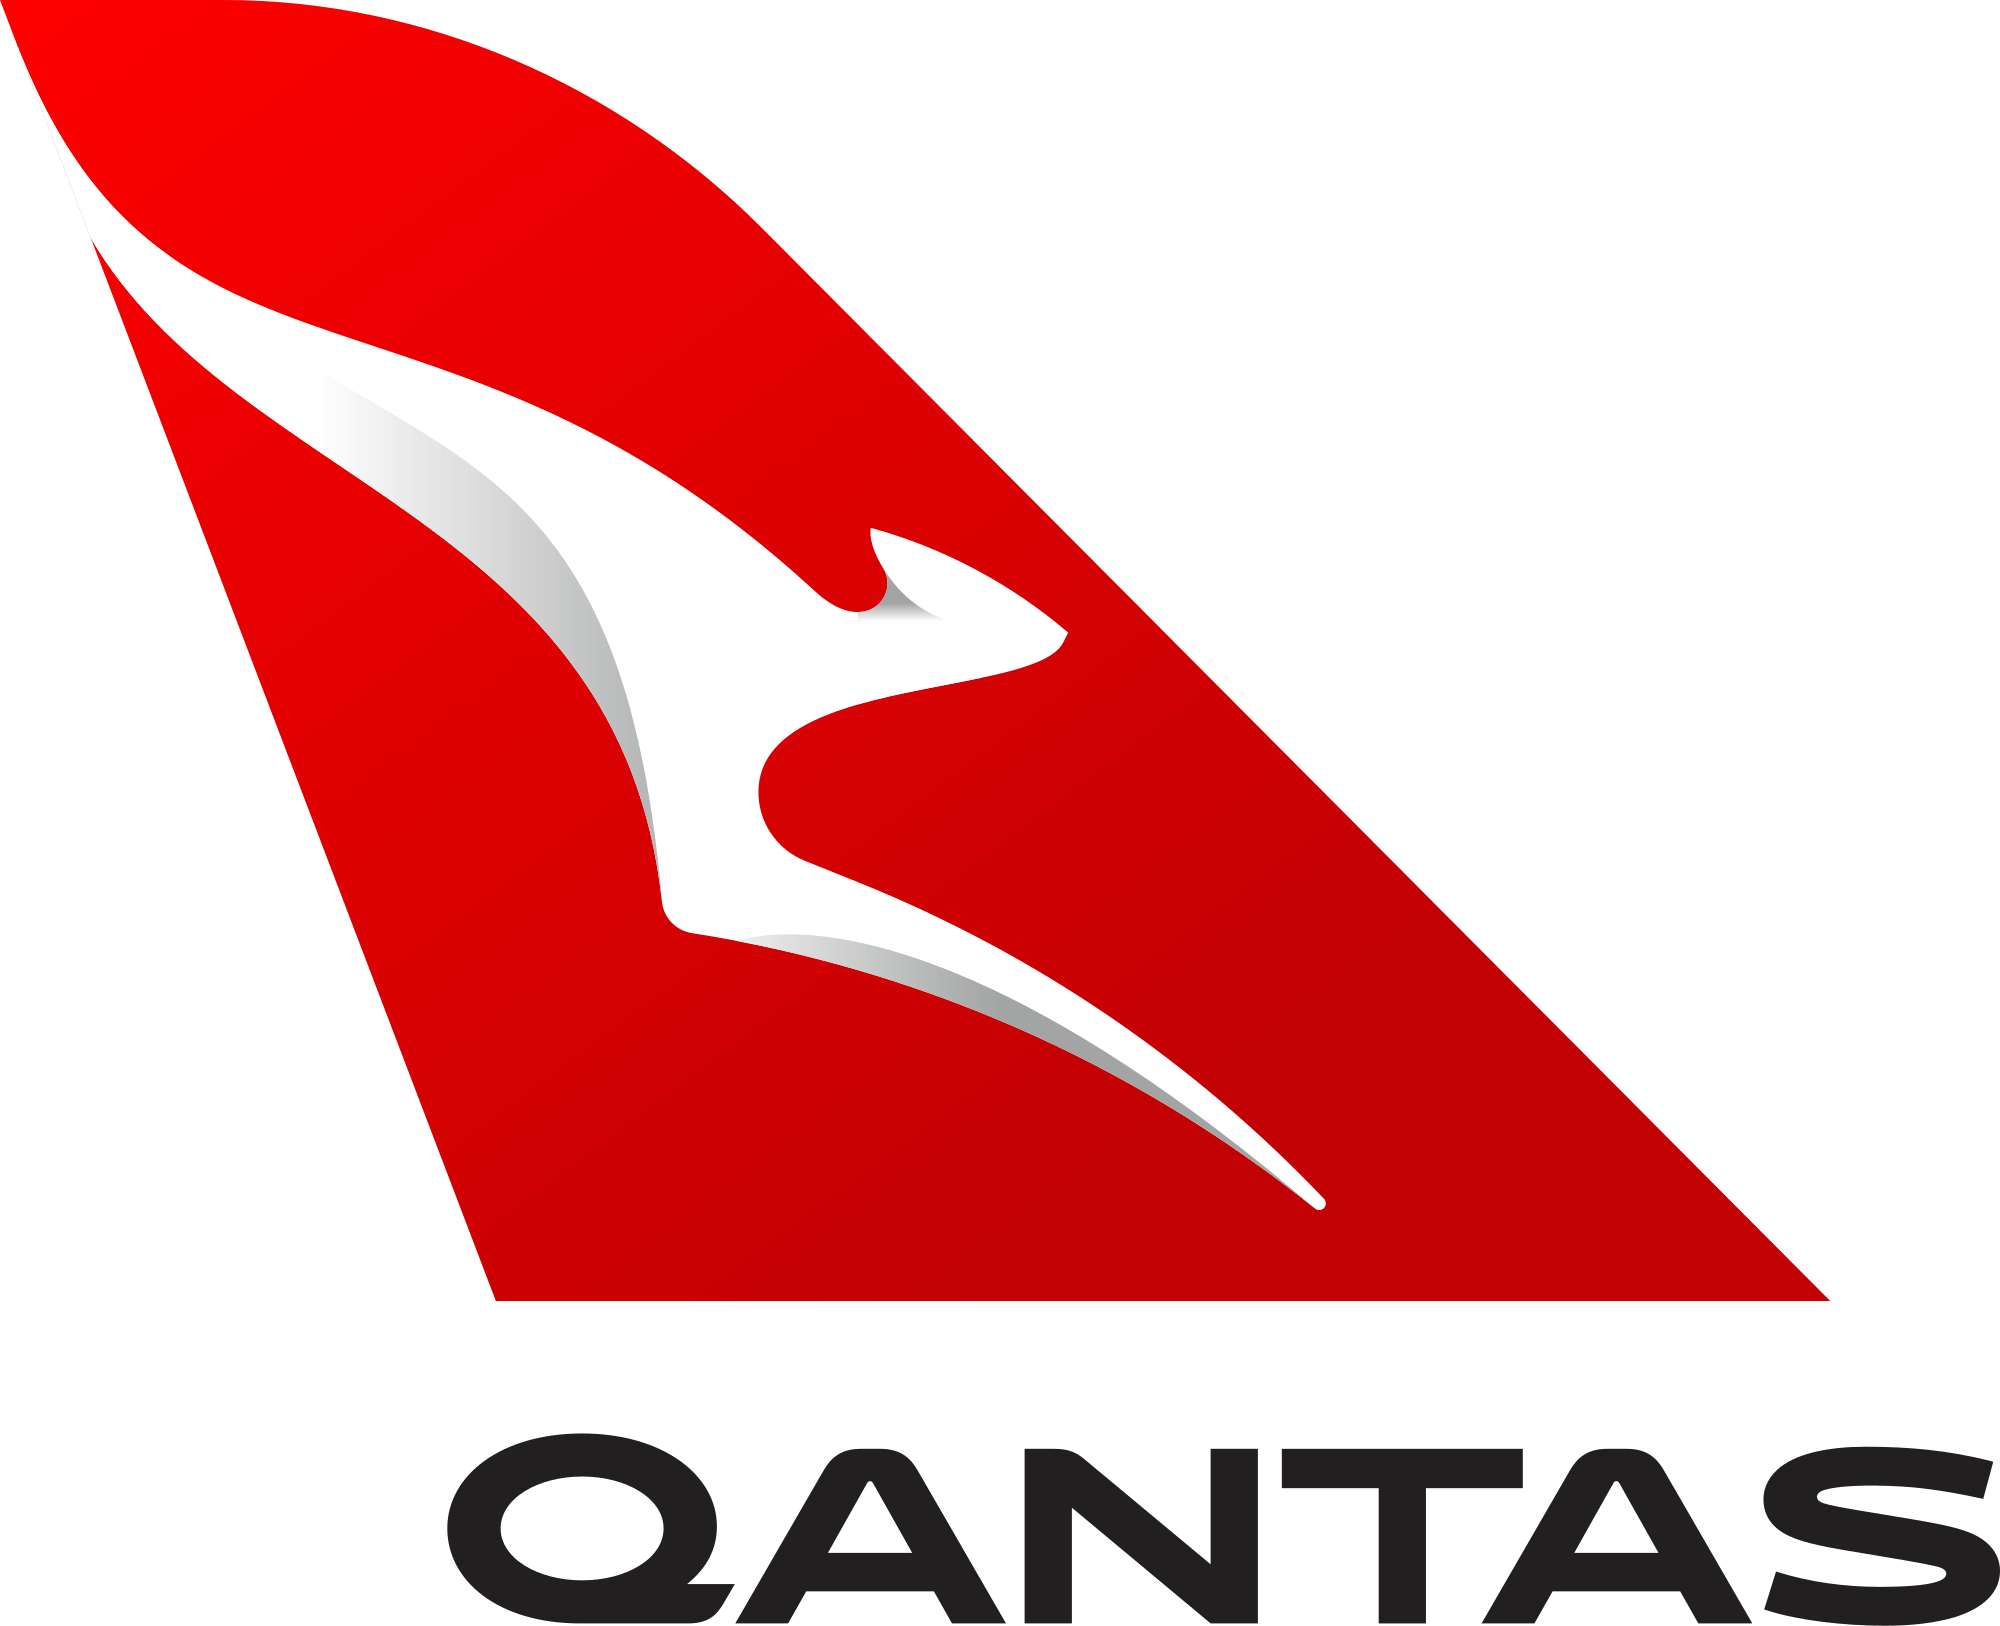 Qantas Logo - Qantas Logo 2016 Version.svg